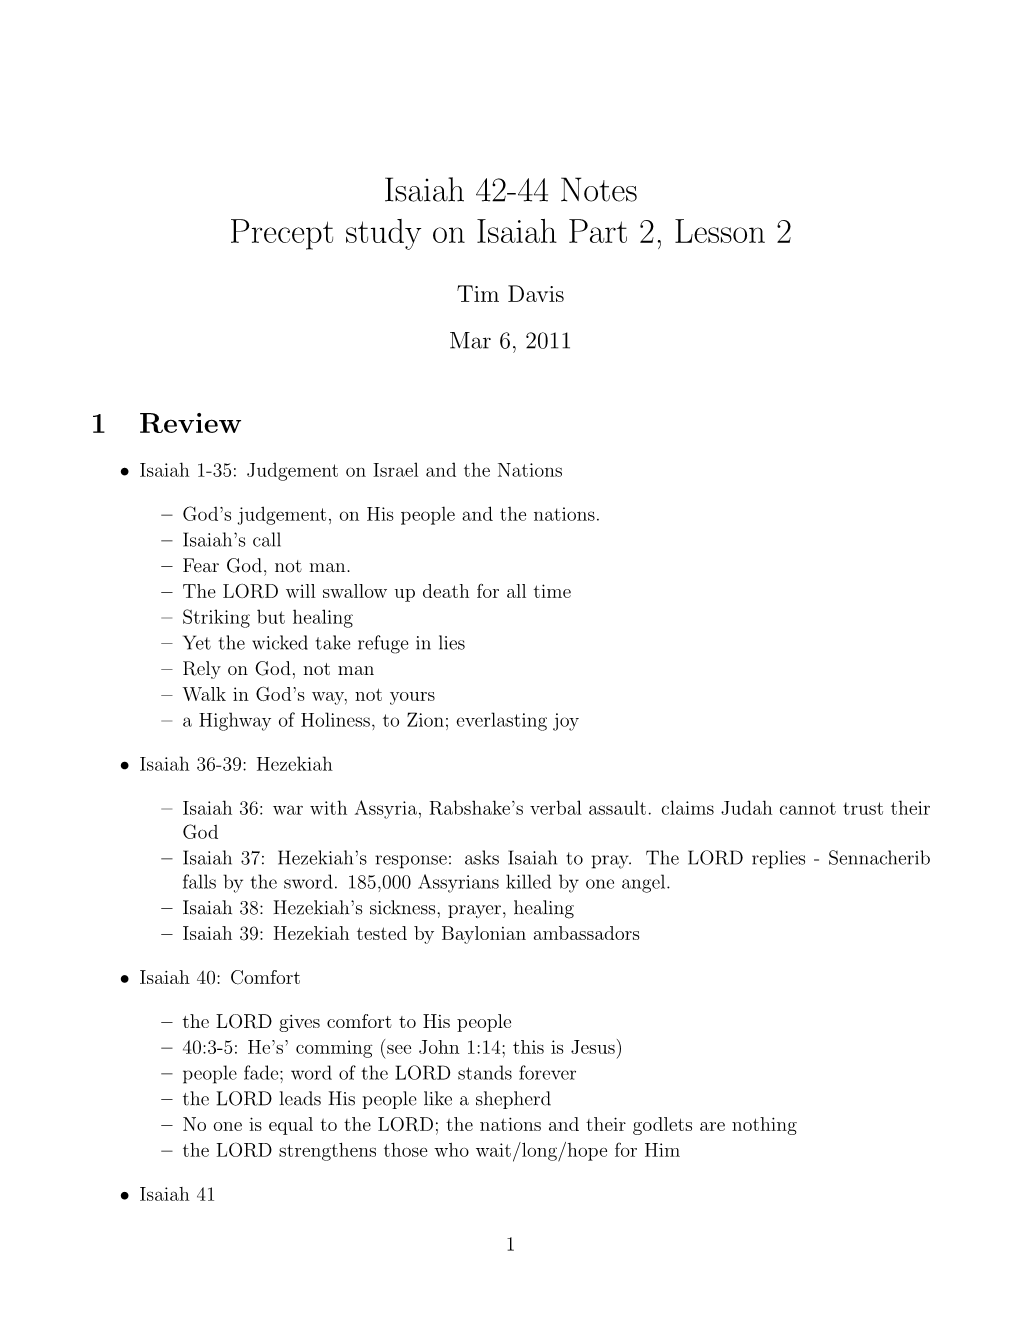 Isaiah 42-44 Notes Precept Study on Isaiah Part 2, Lesson 2